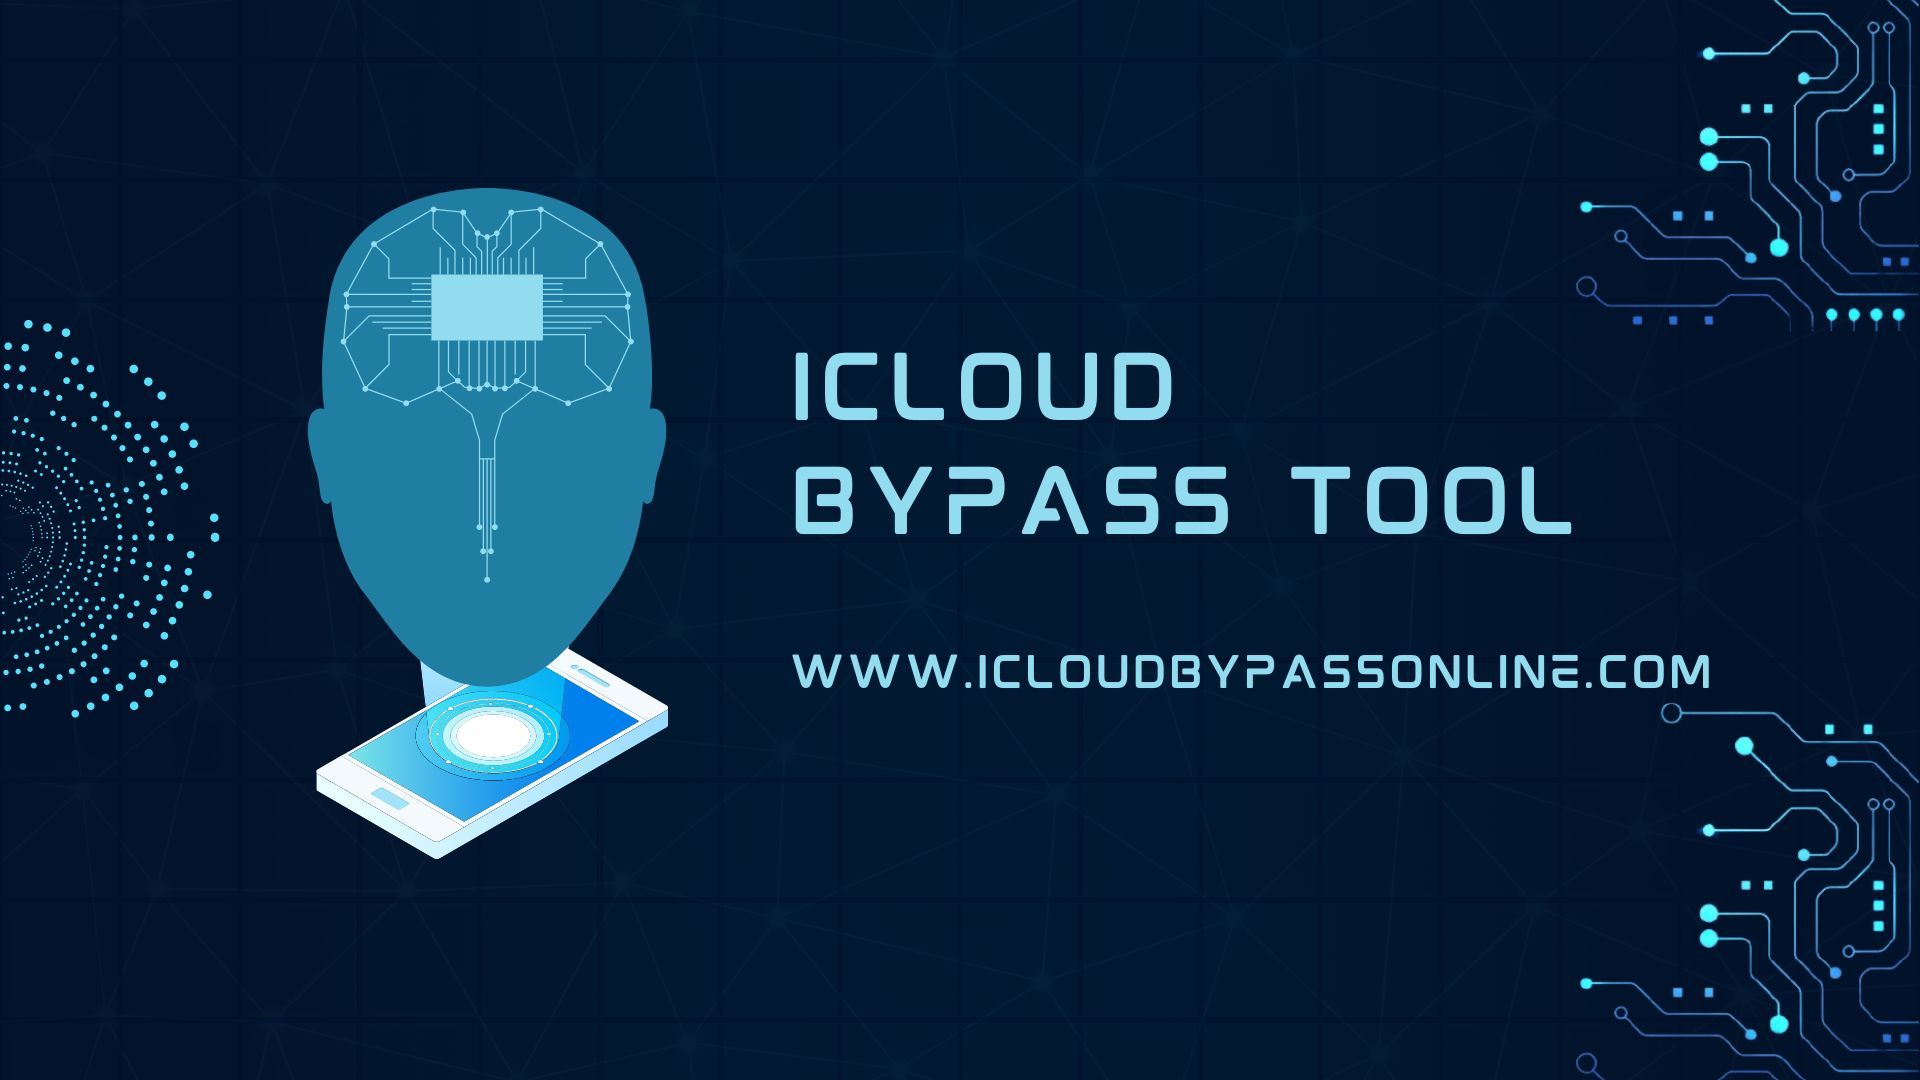 iCloud Bypass Tool